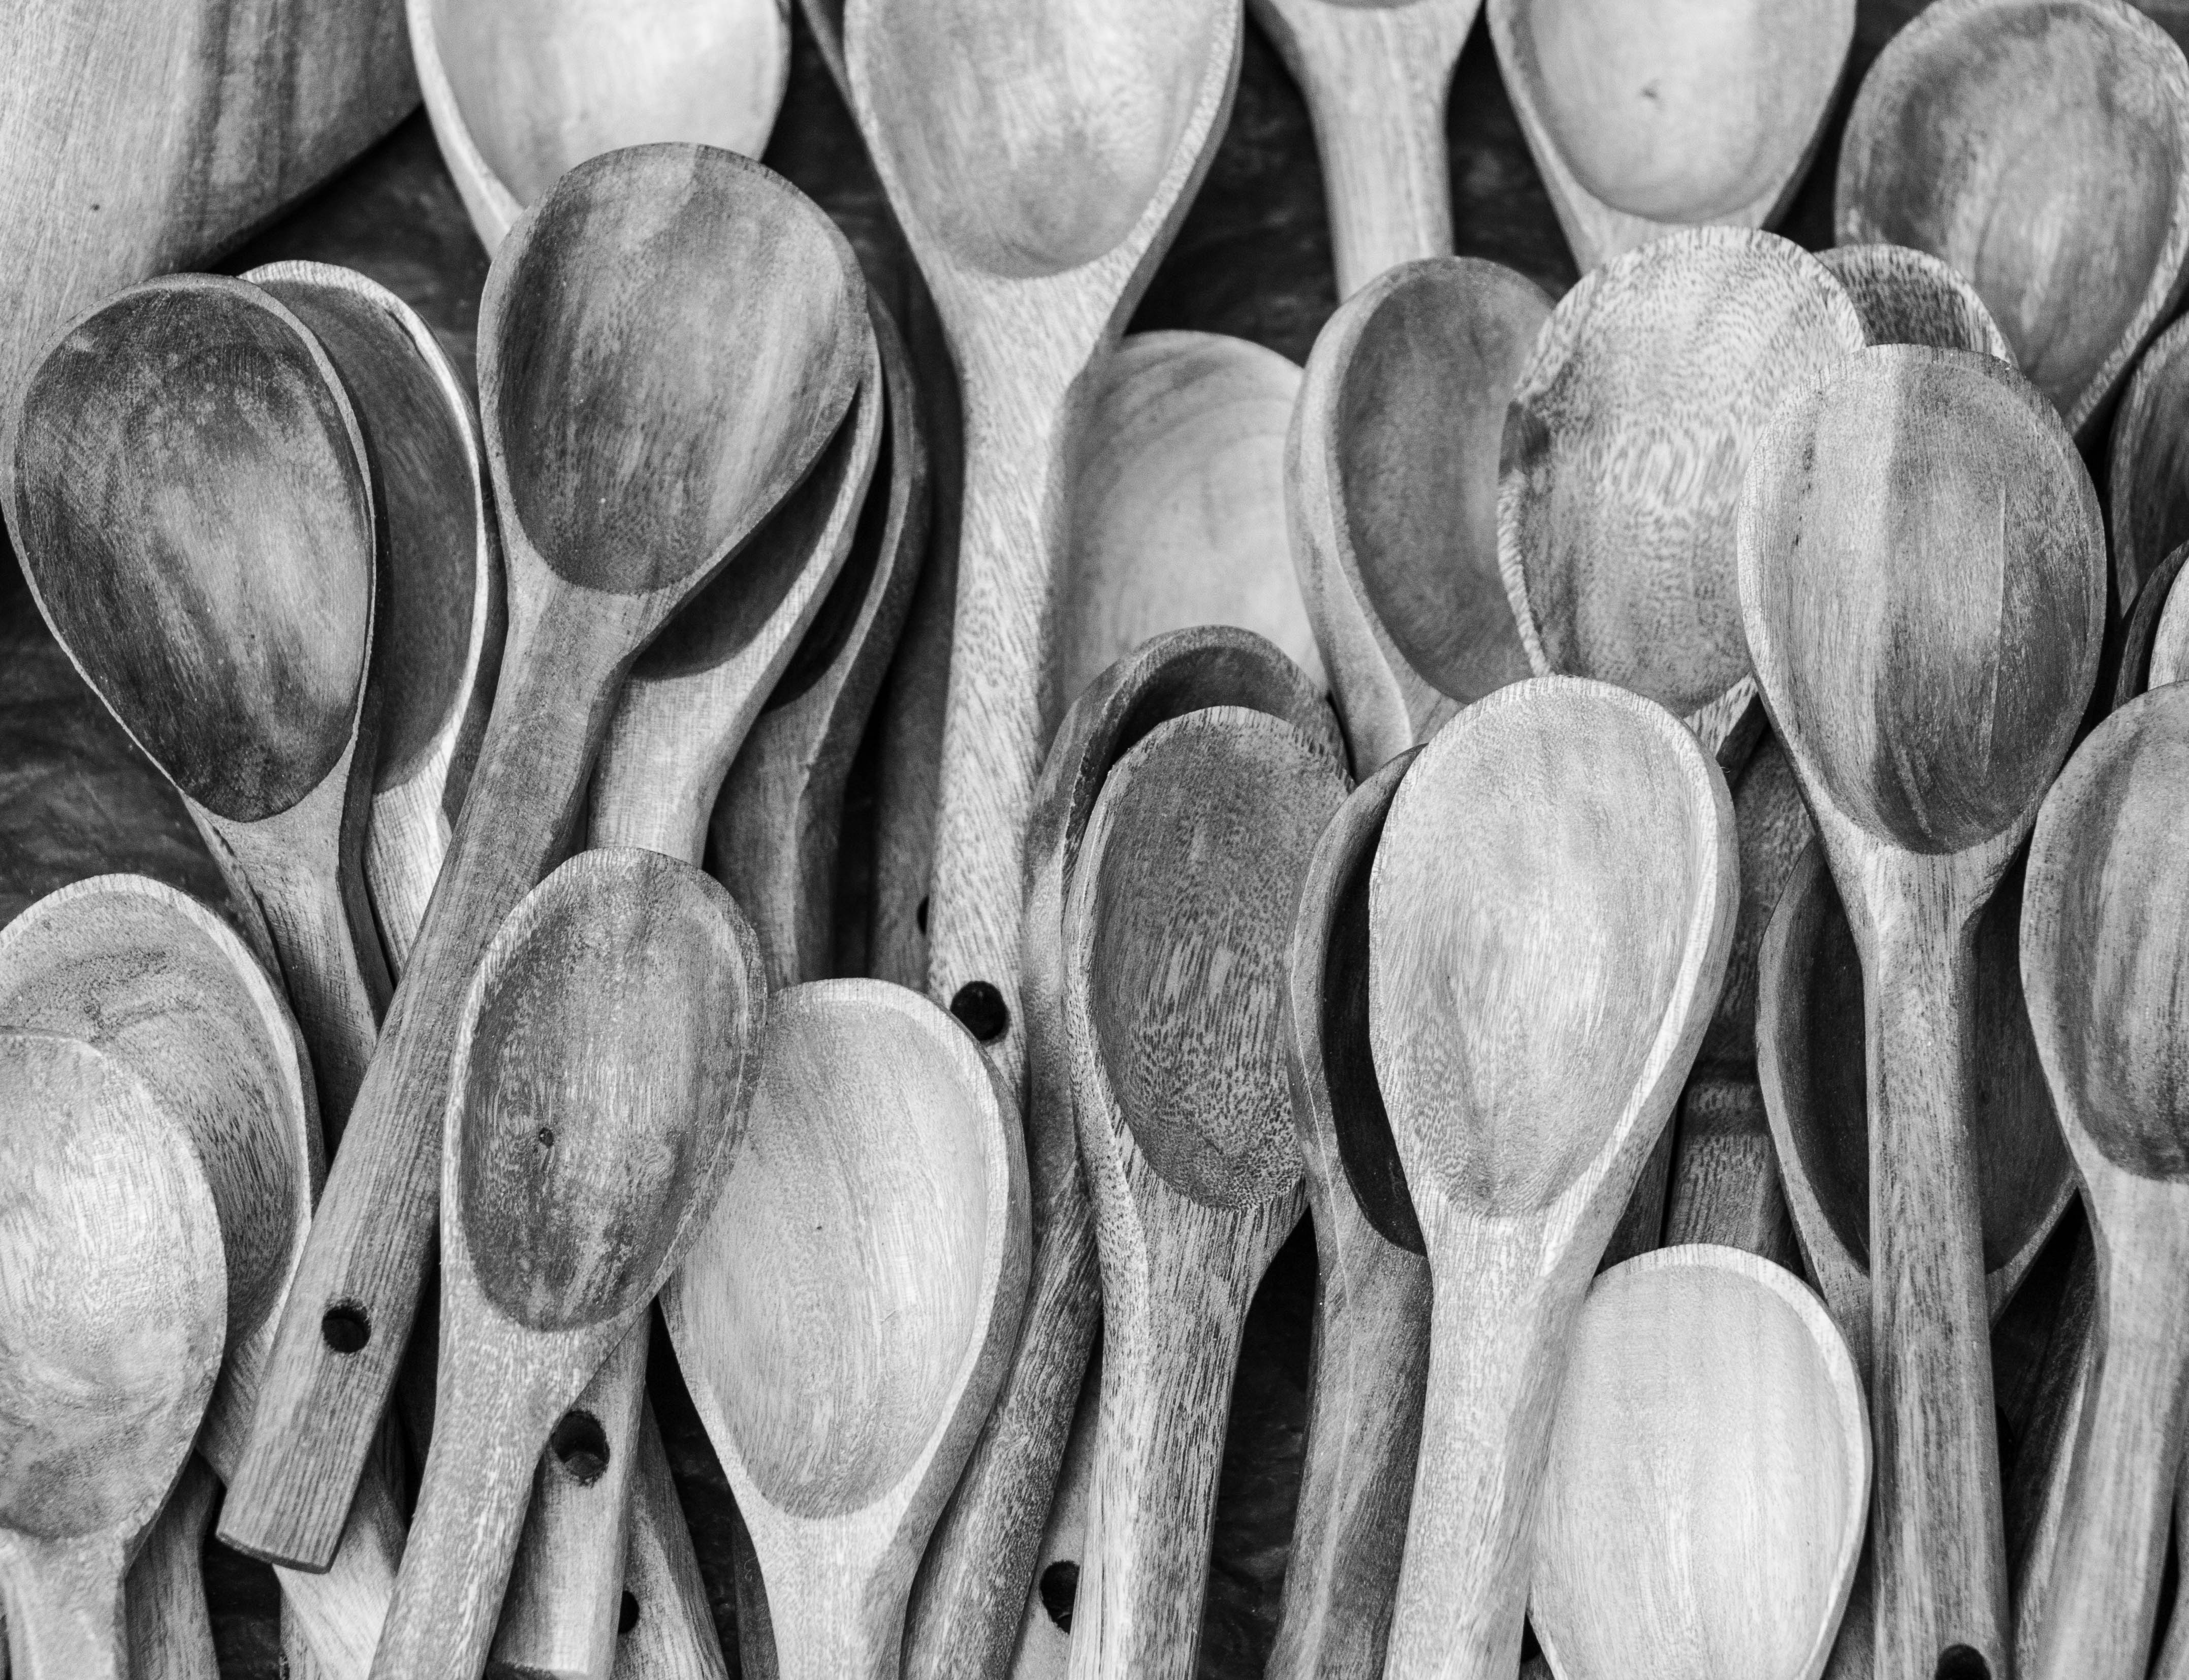 More wooden most wooden. Wooden Spoon jpg. Spoon Barrel.